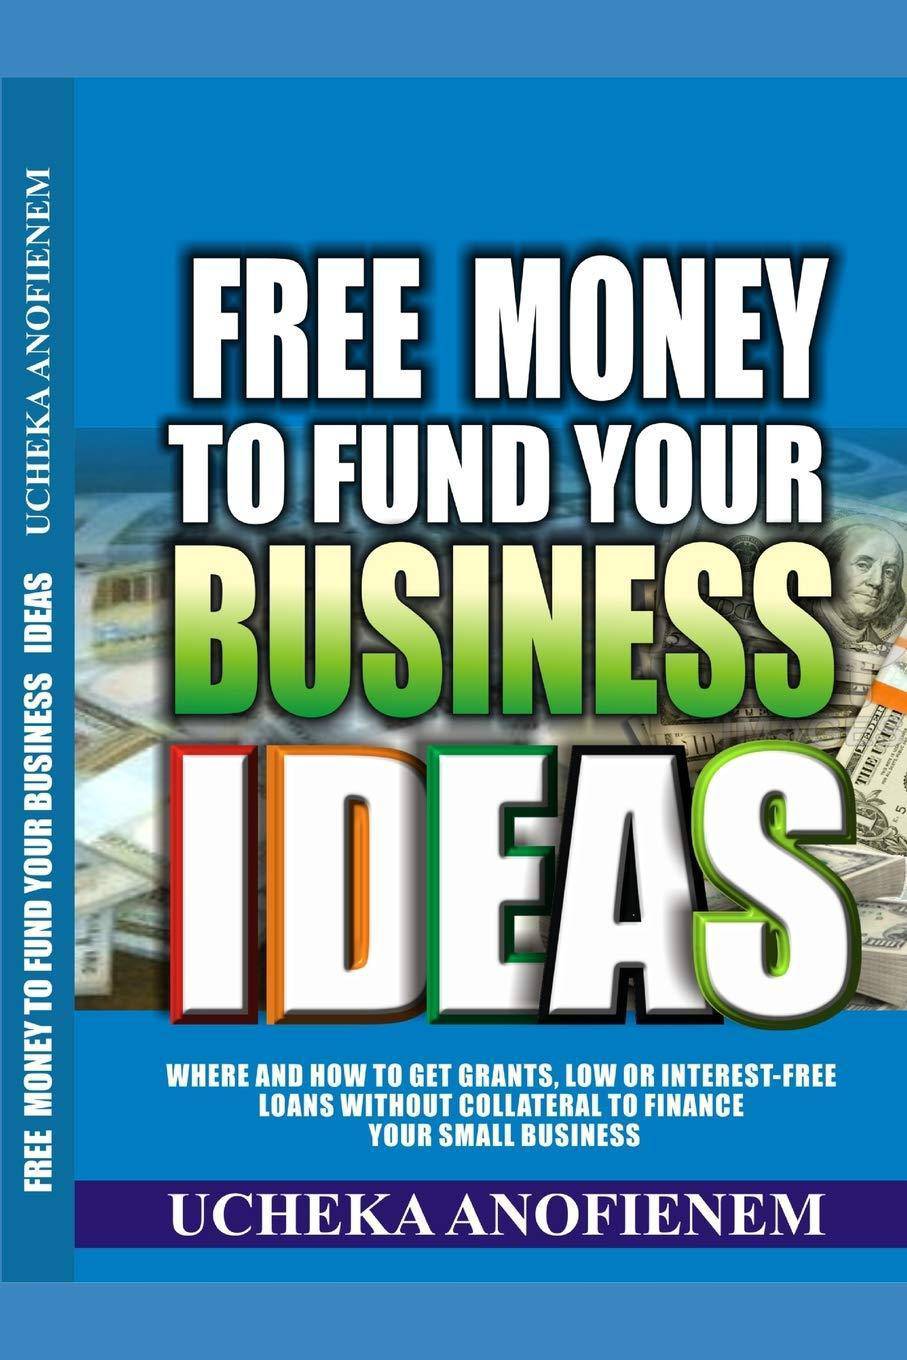 Free Money to Fund Your Business Ideas - SureShot Books Publishing LLC